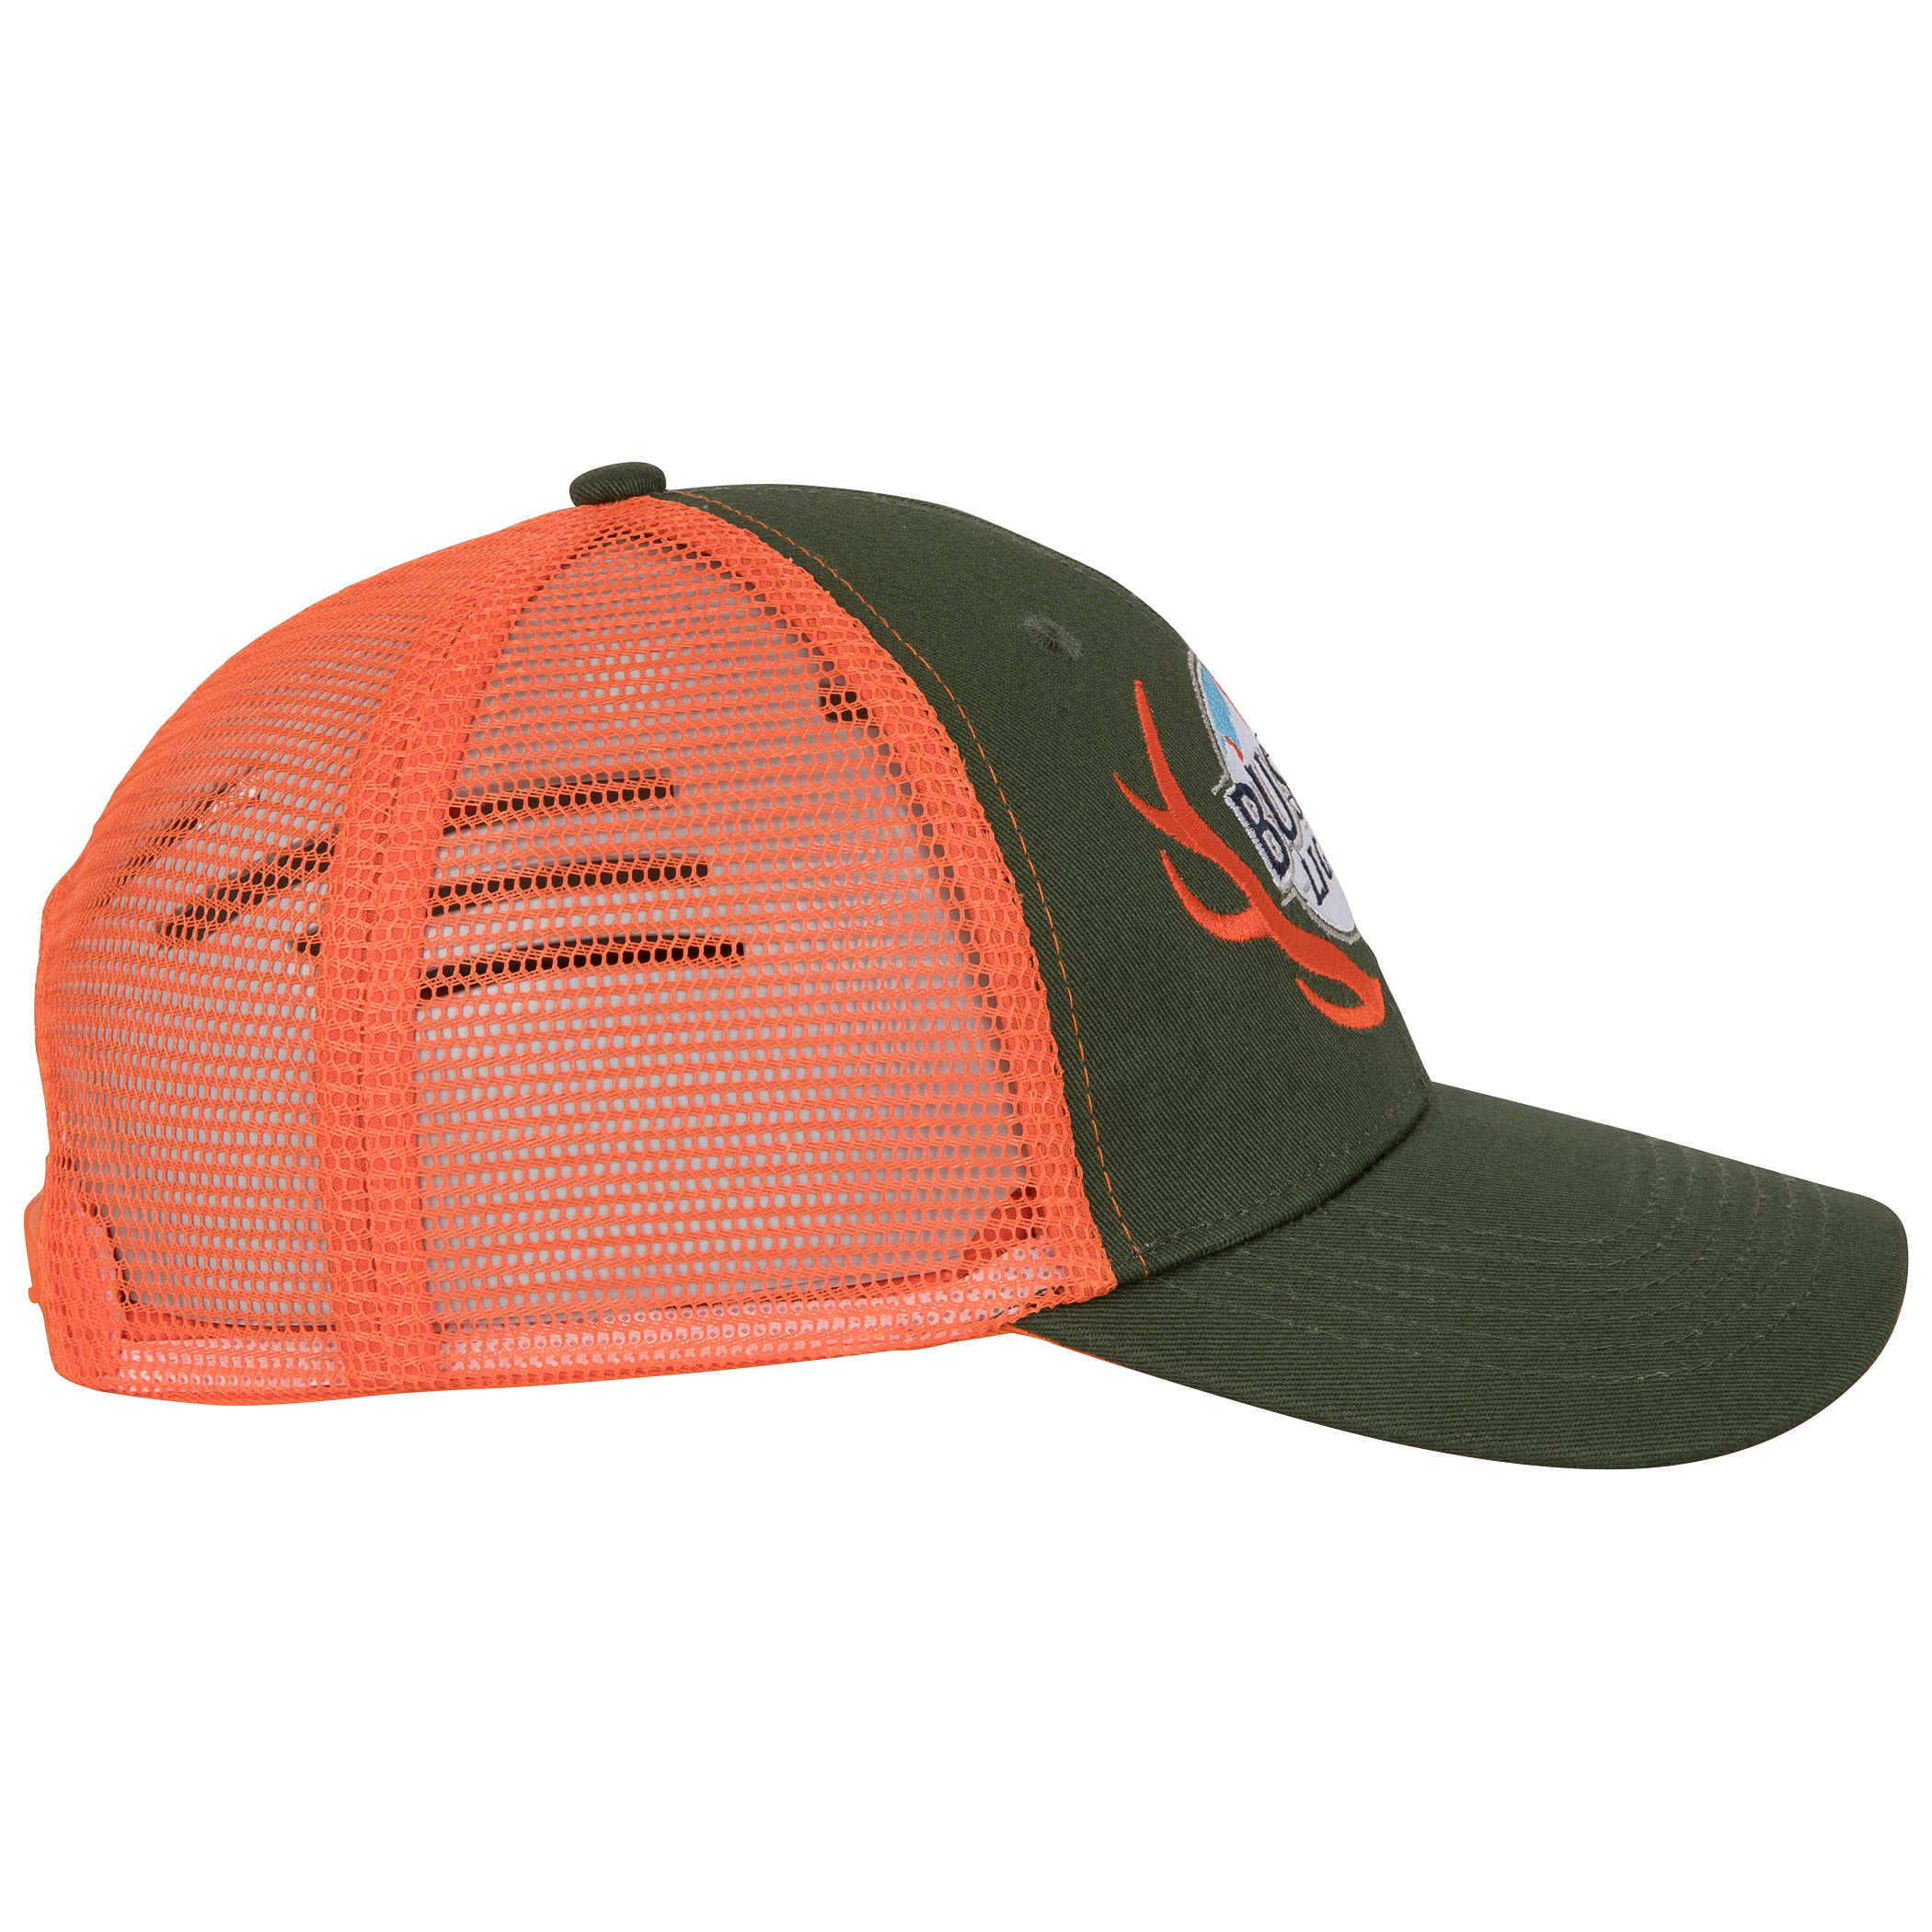 Busch Light Antlers Green Colorway Snapback Cap